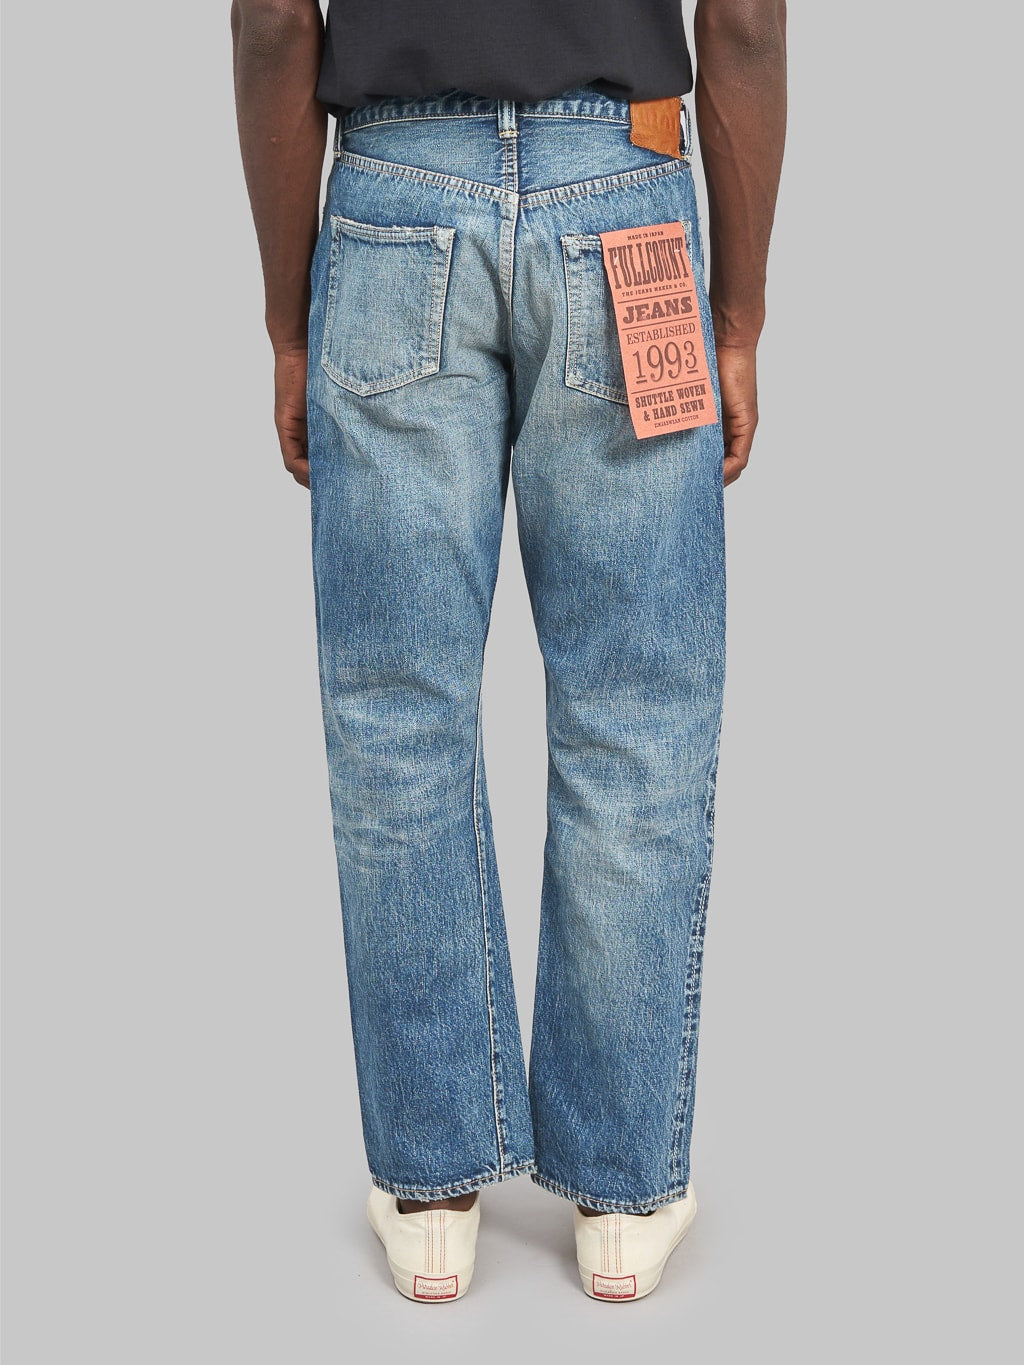 Fullcount 1101 Dartford wide Straight Jeans back rise